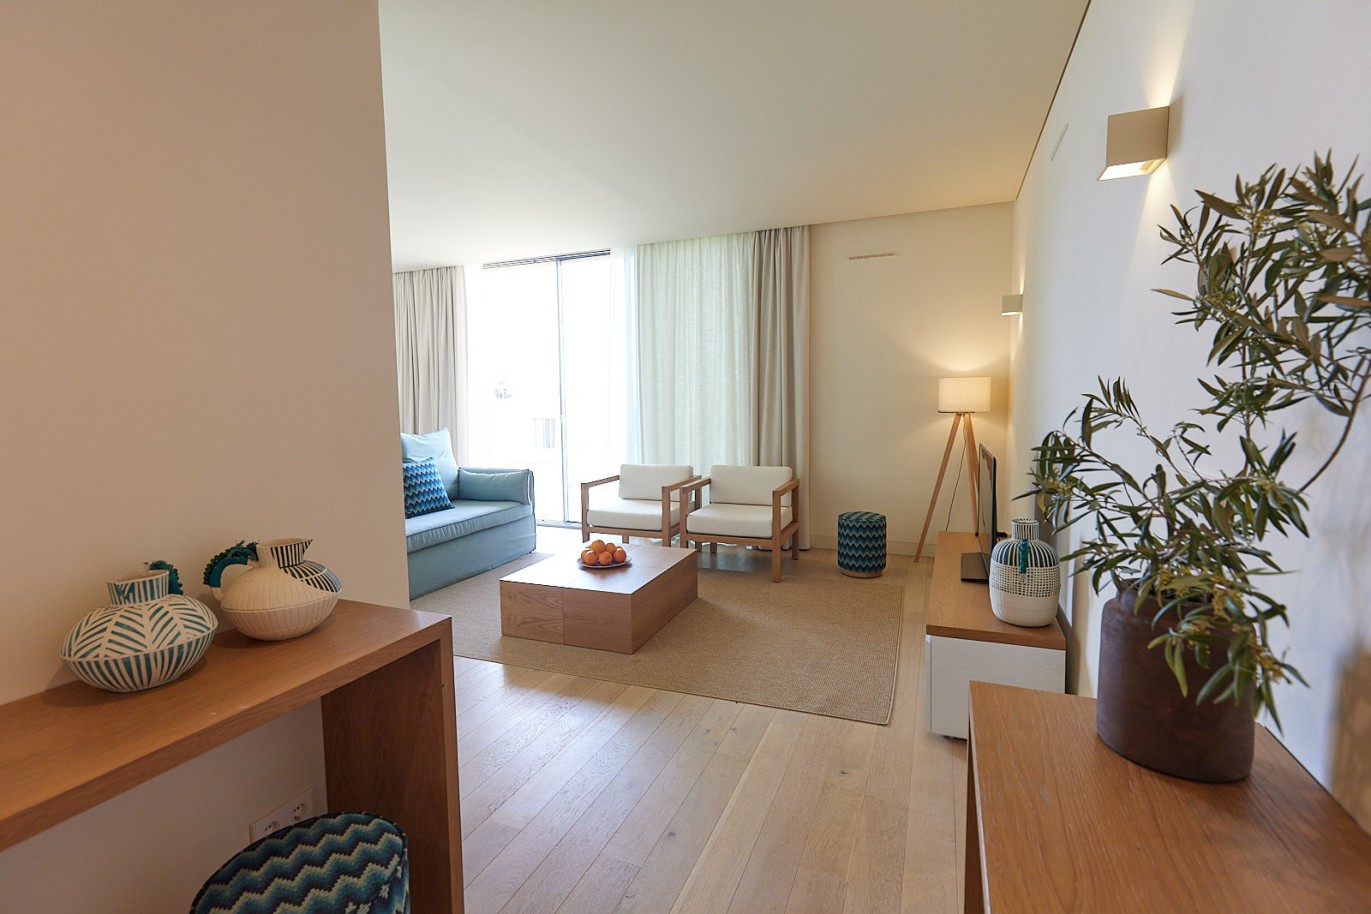 2 bedroom apartment in resort, for sale in Porches, Algarve_229154